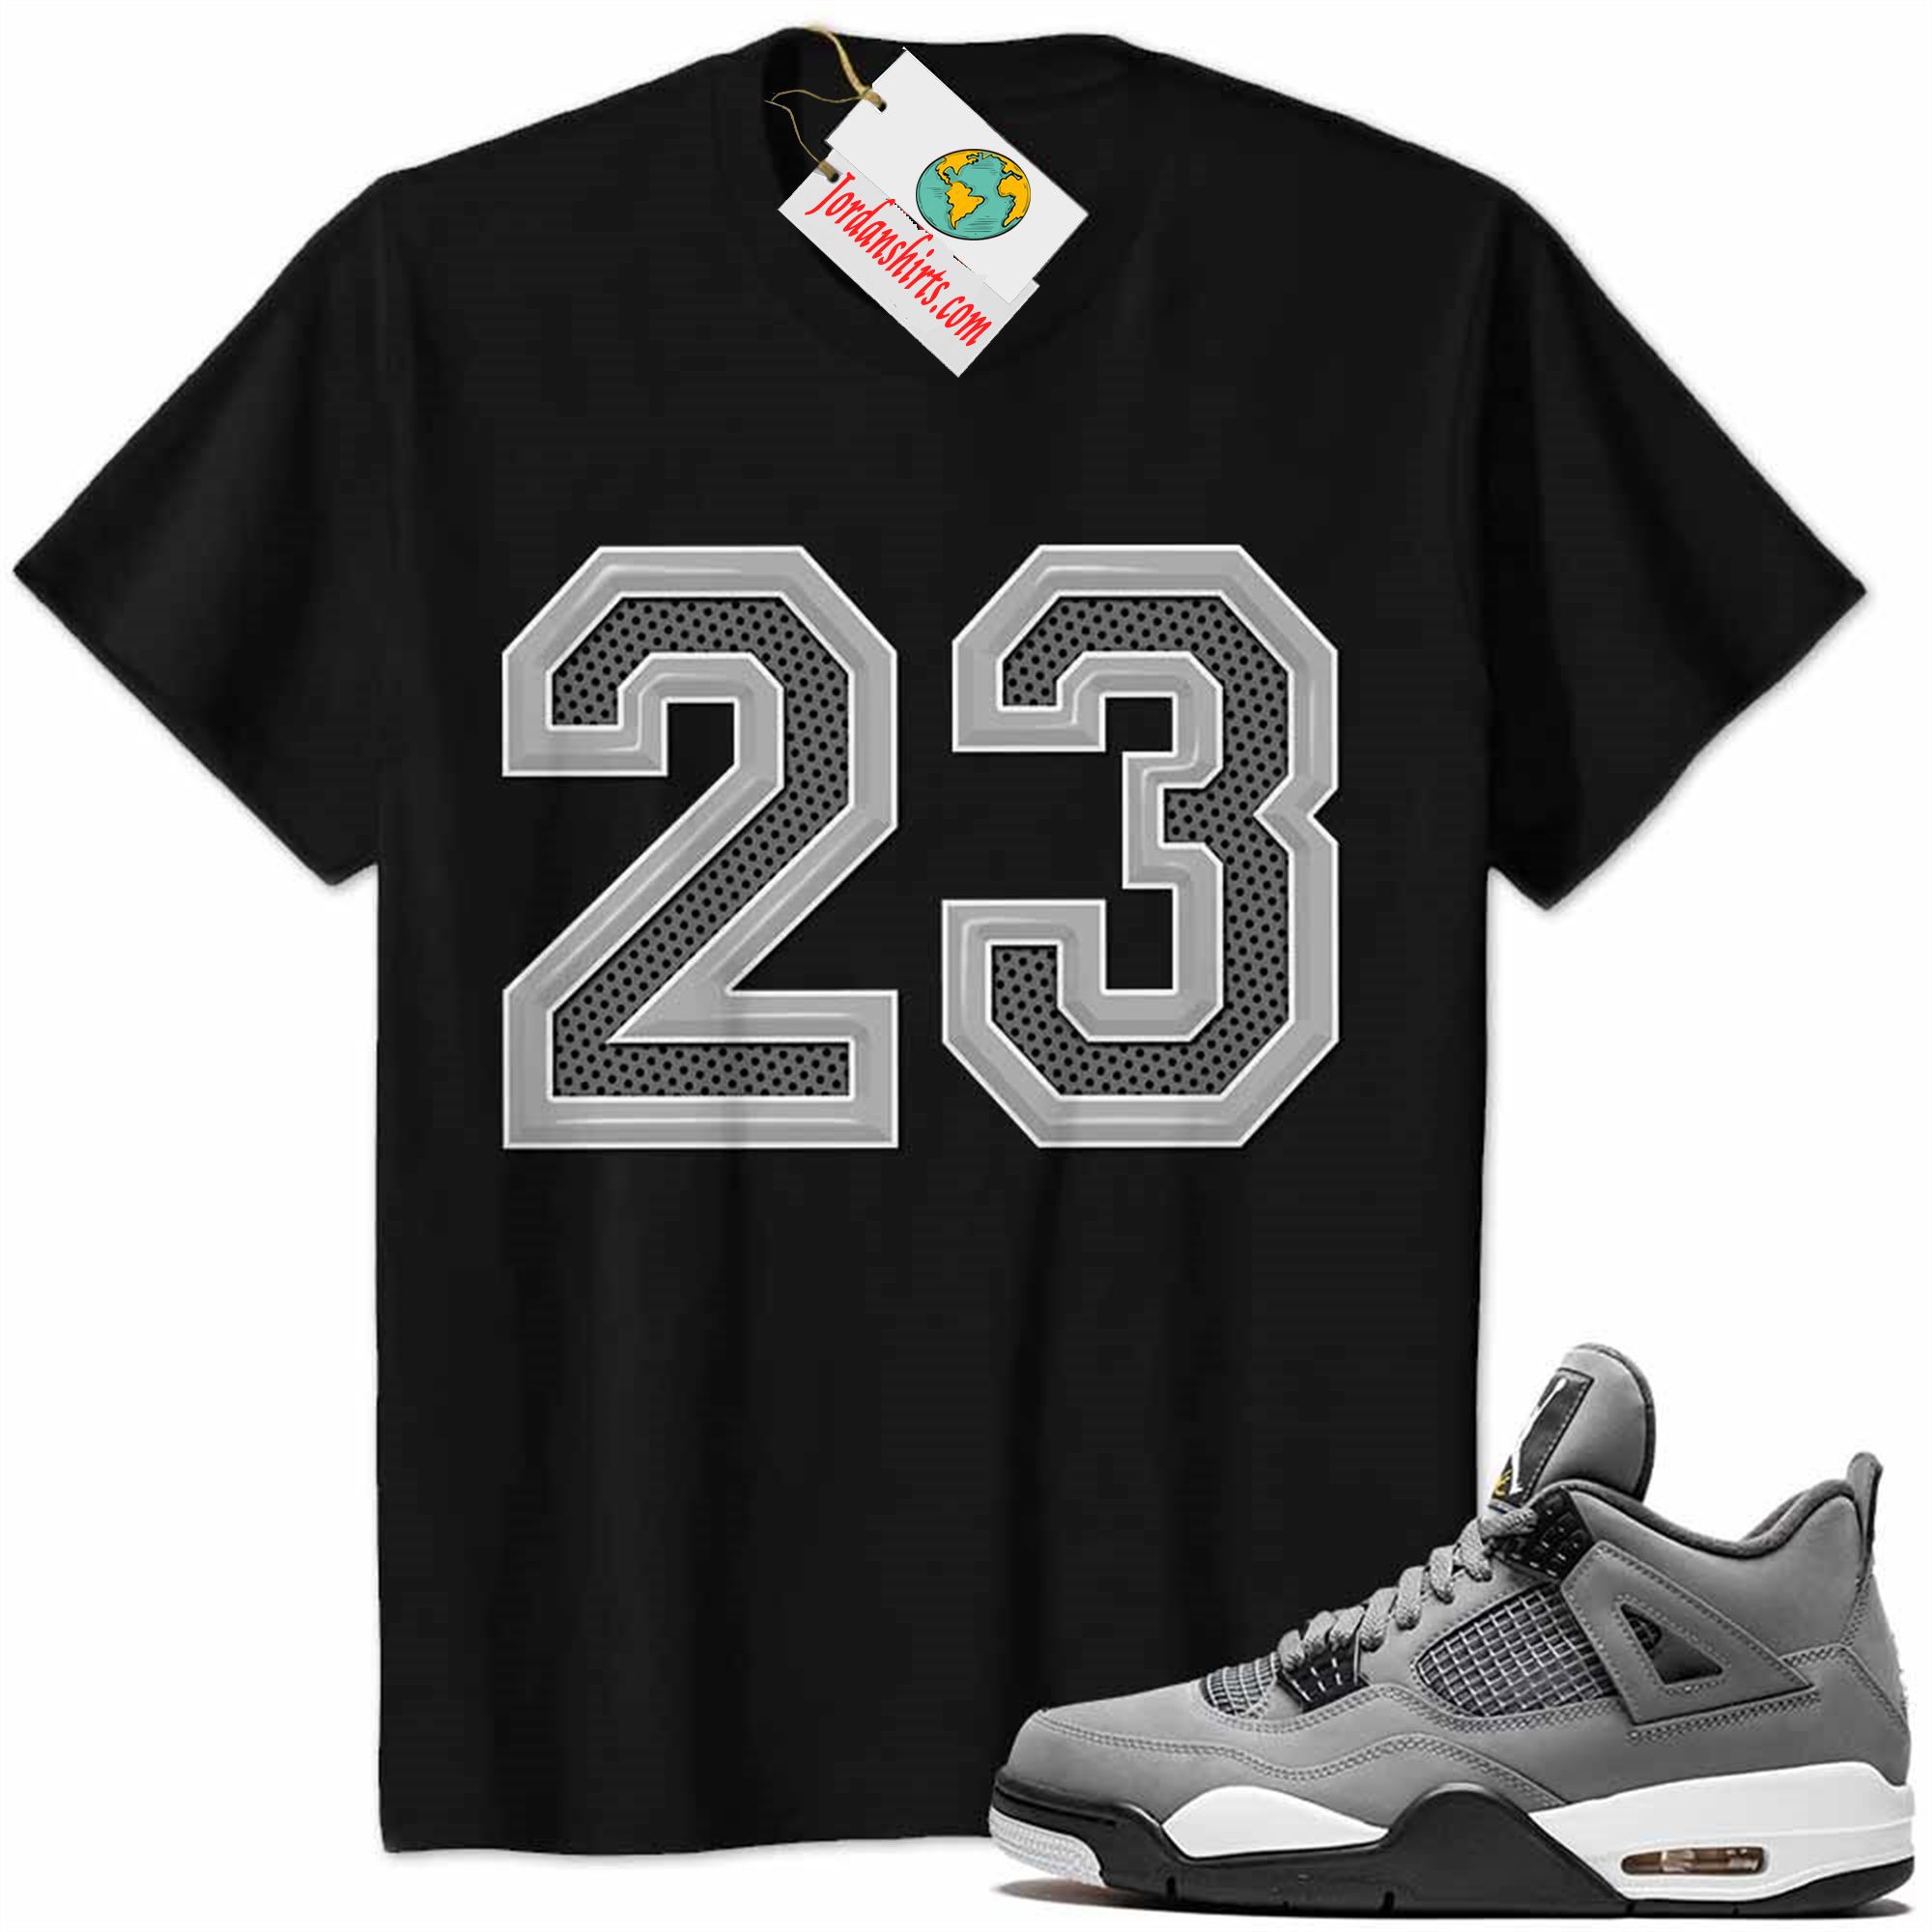 Jordan 4 Shirt, Jordan 4 Cool Grey Shirt Michael Jordan Number 23 Black Full Size Up To 5xl